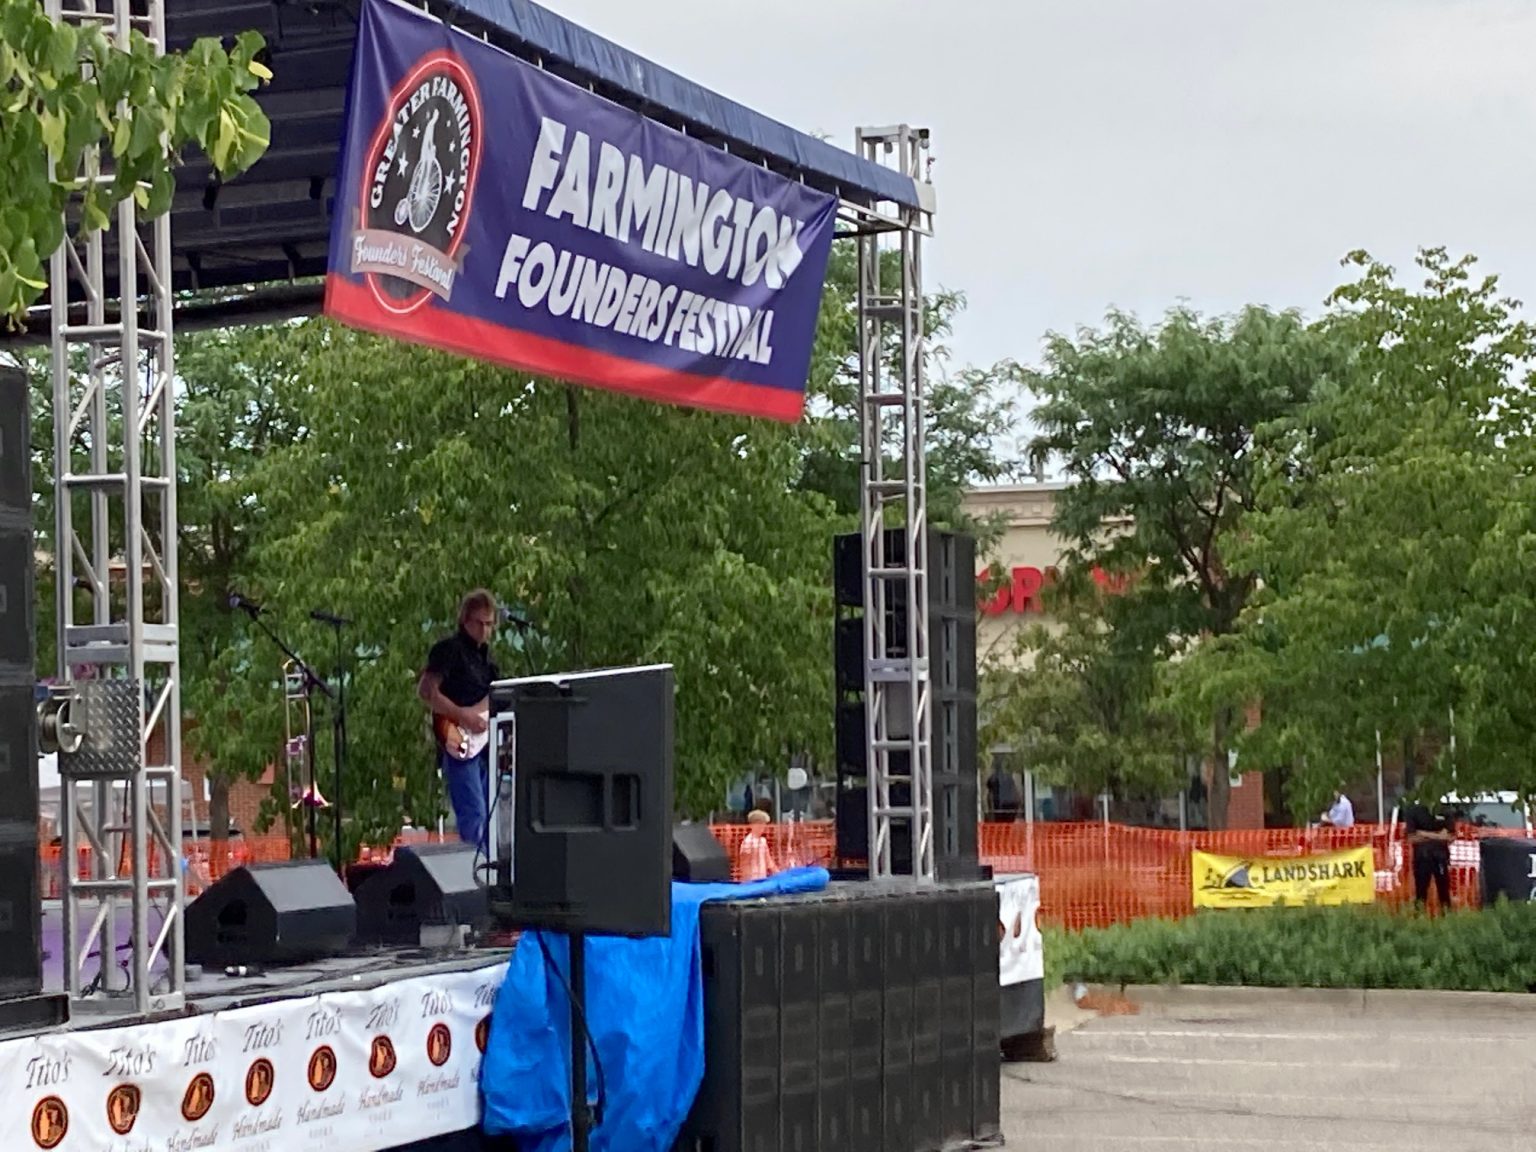 PHOTOS 2022 Farmington Founders Festival in downtown Farmington, MI